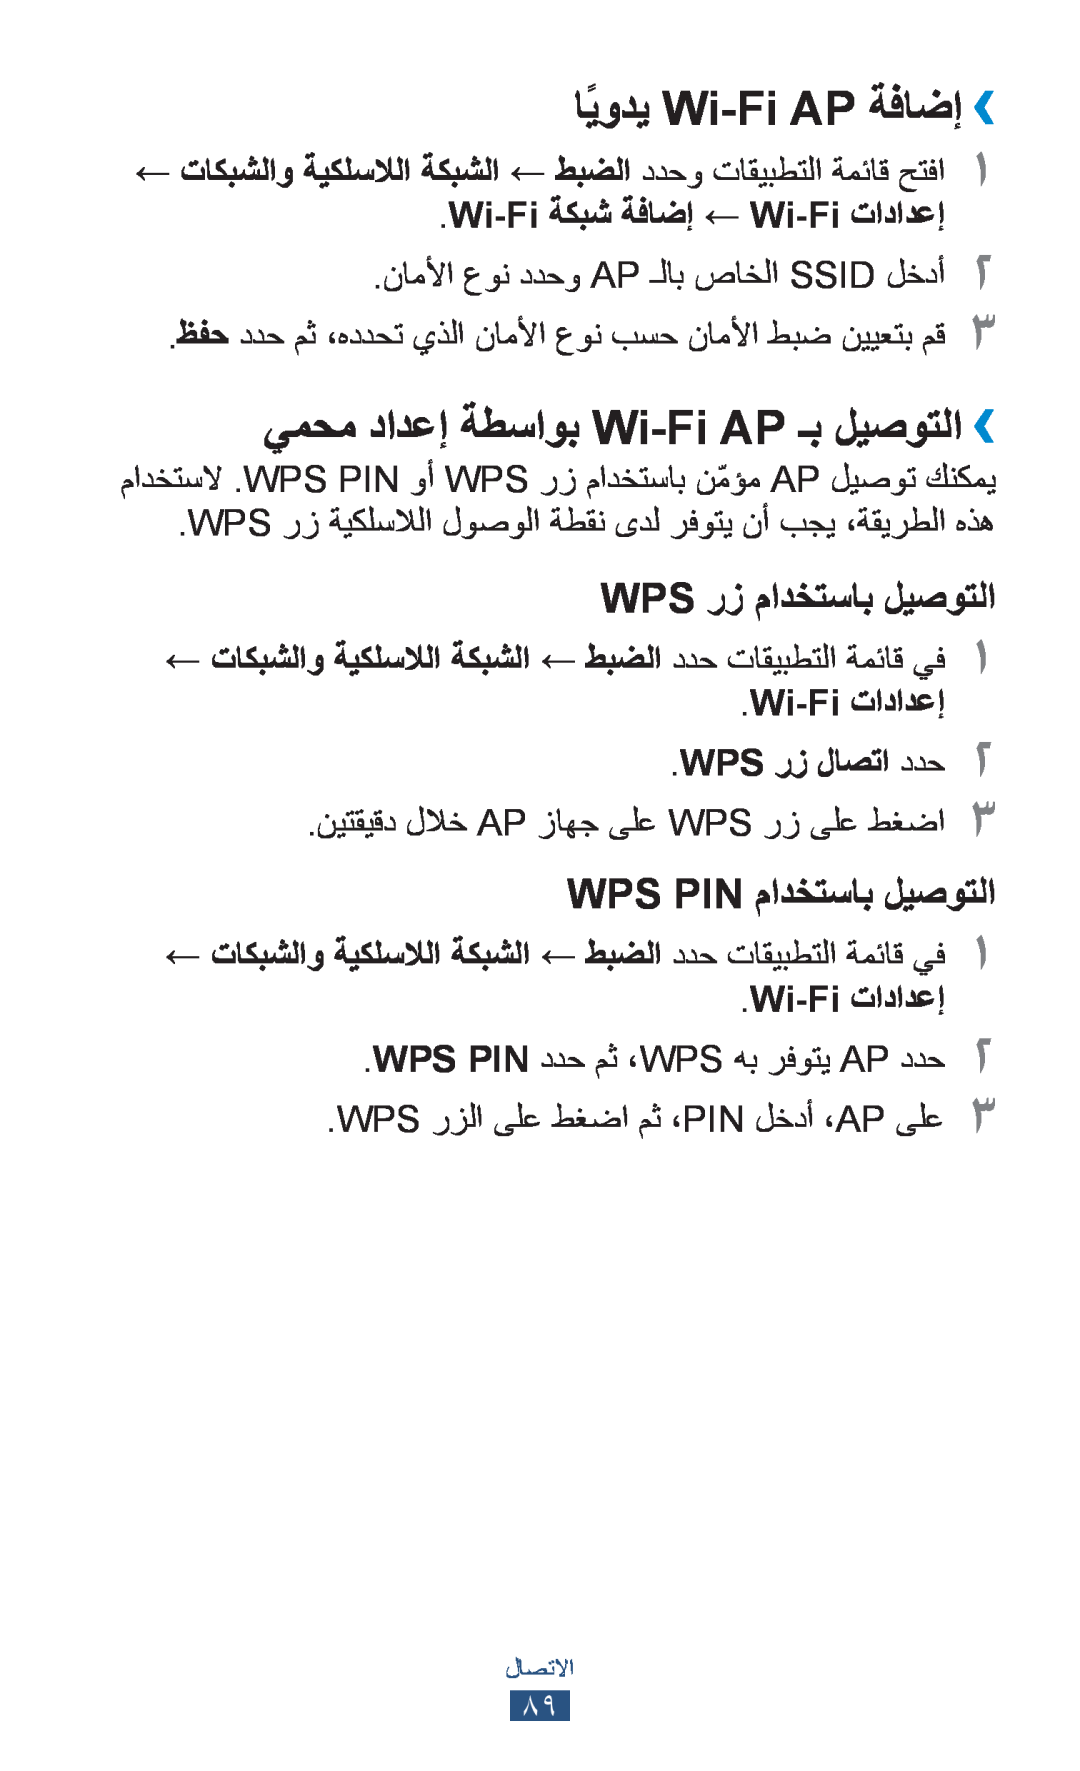 Samsung GT-S5300ZOAKSA manual اًيودي Wi-Fi AP ةفاضإ››, يمحم دادعإ ةطساوب Wi-Fi AP ـب ليصوتلا››, Wps رز مادختساب ليصوتلا 